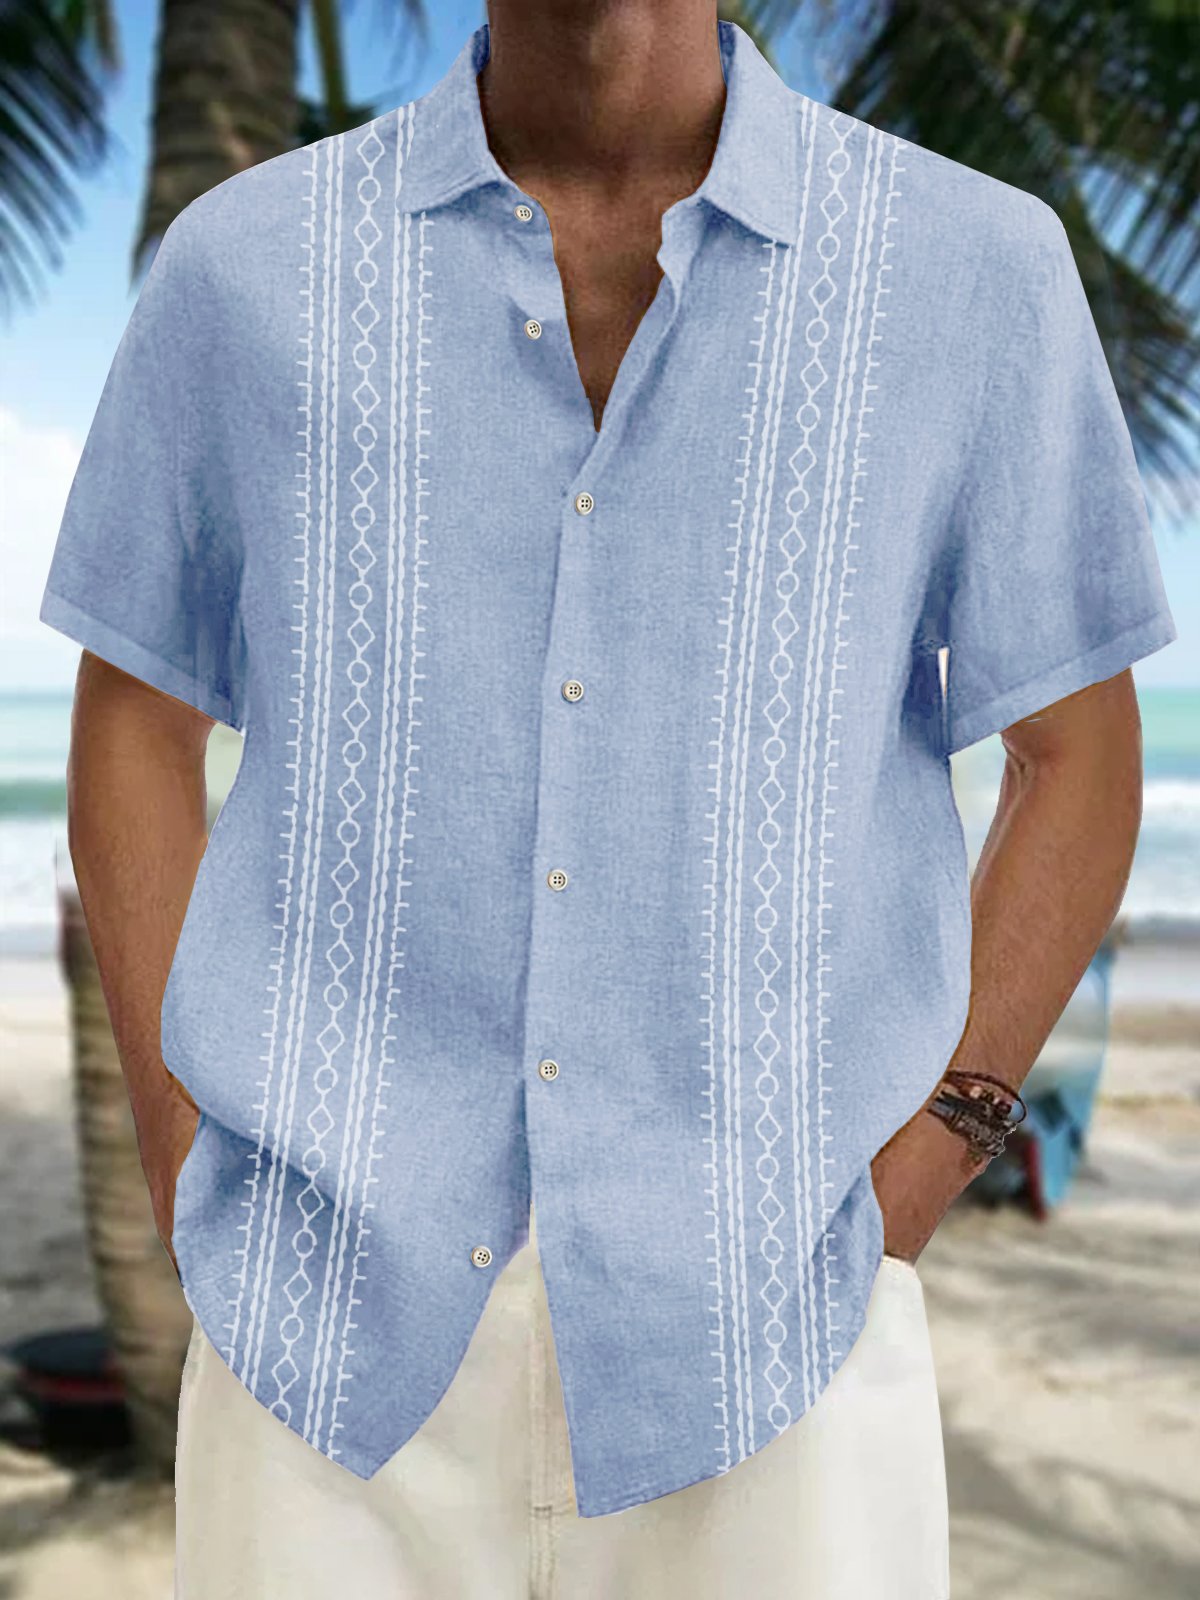  Holiday Casual Men's Guayabera Shirts Aztec Cotton Linen Blend Plus Size Camp Shirts